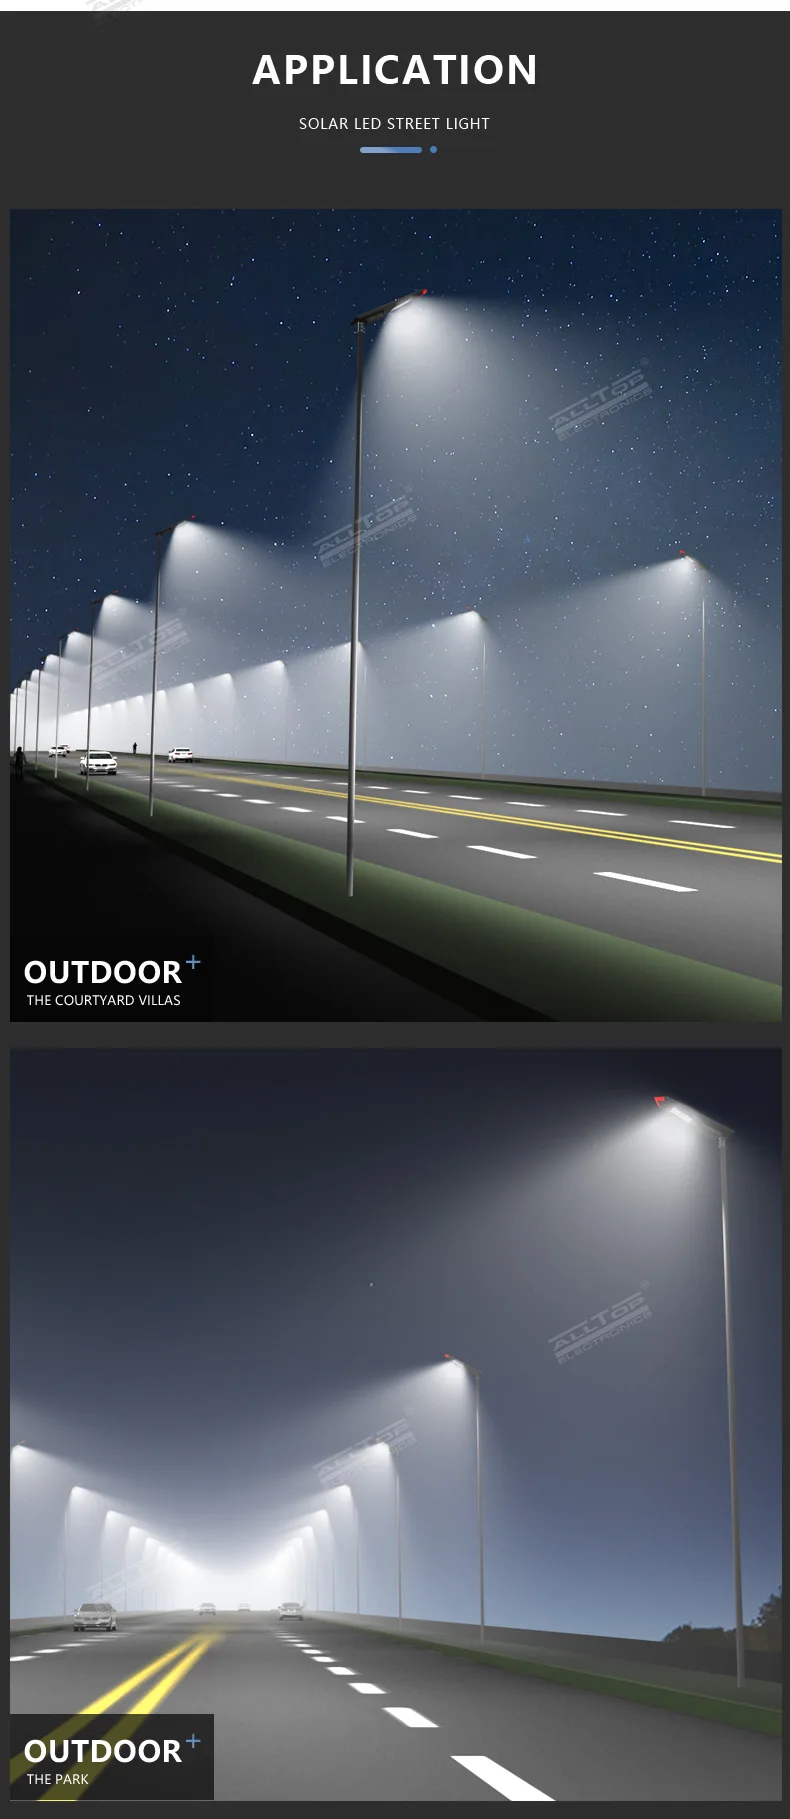 ALLTOP High lumen bridgelux smd outdoor waterproof ip65 150w integrated all in one solar led streetlight